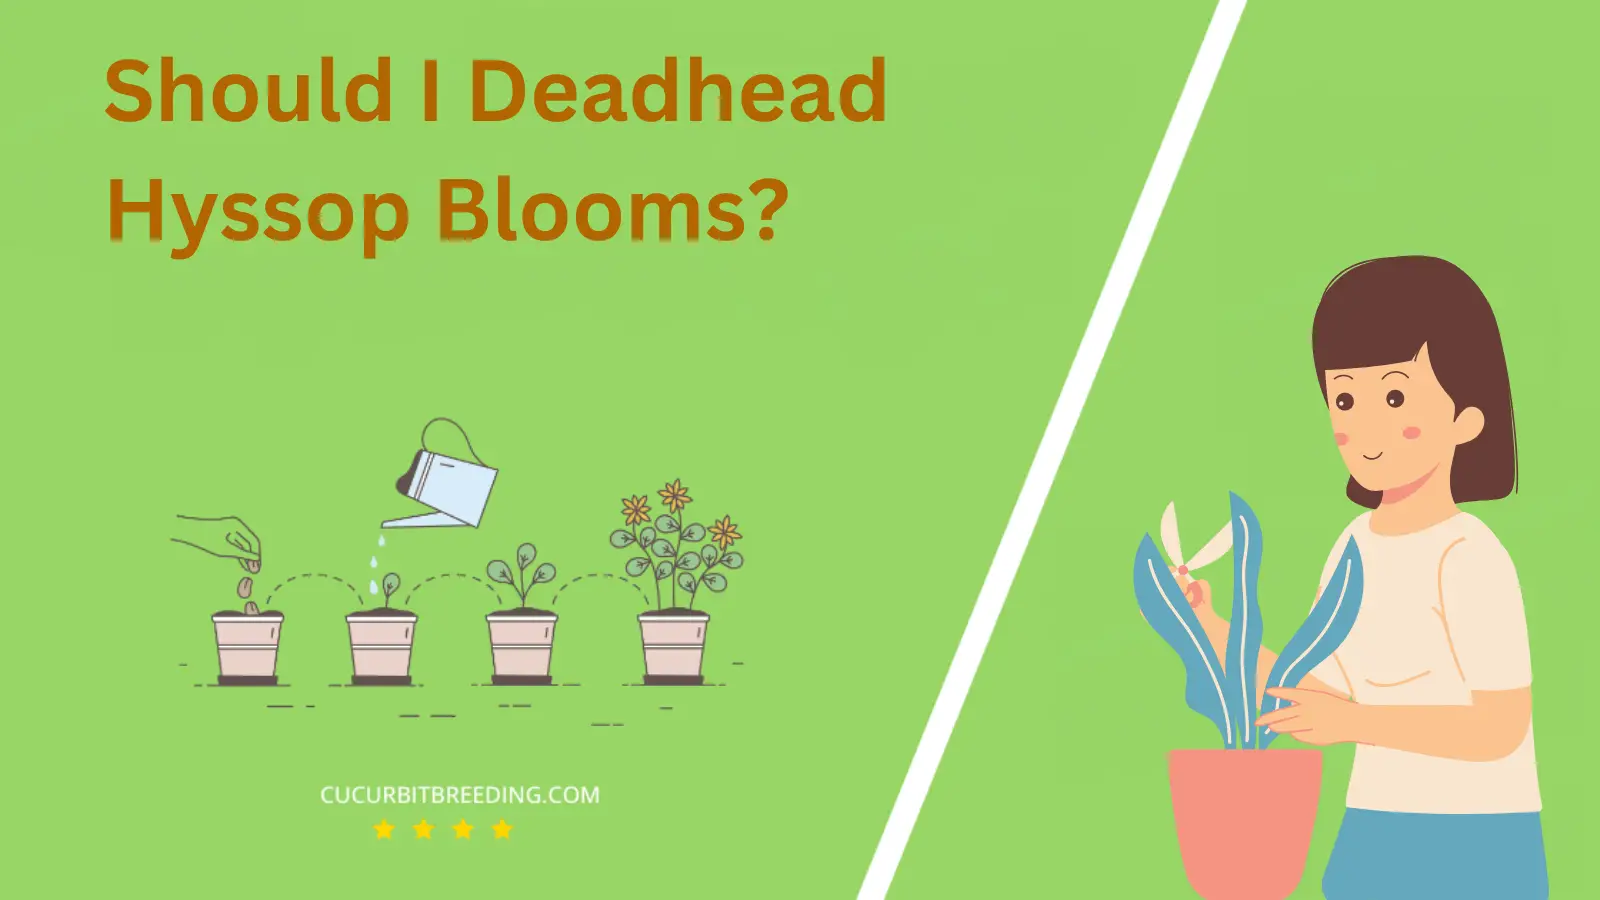 Should I Deadhead Hyssop Blooms?